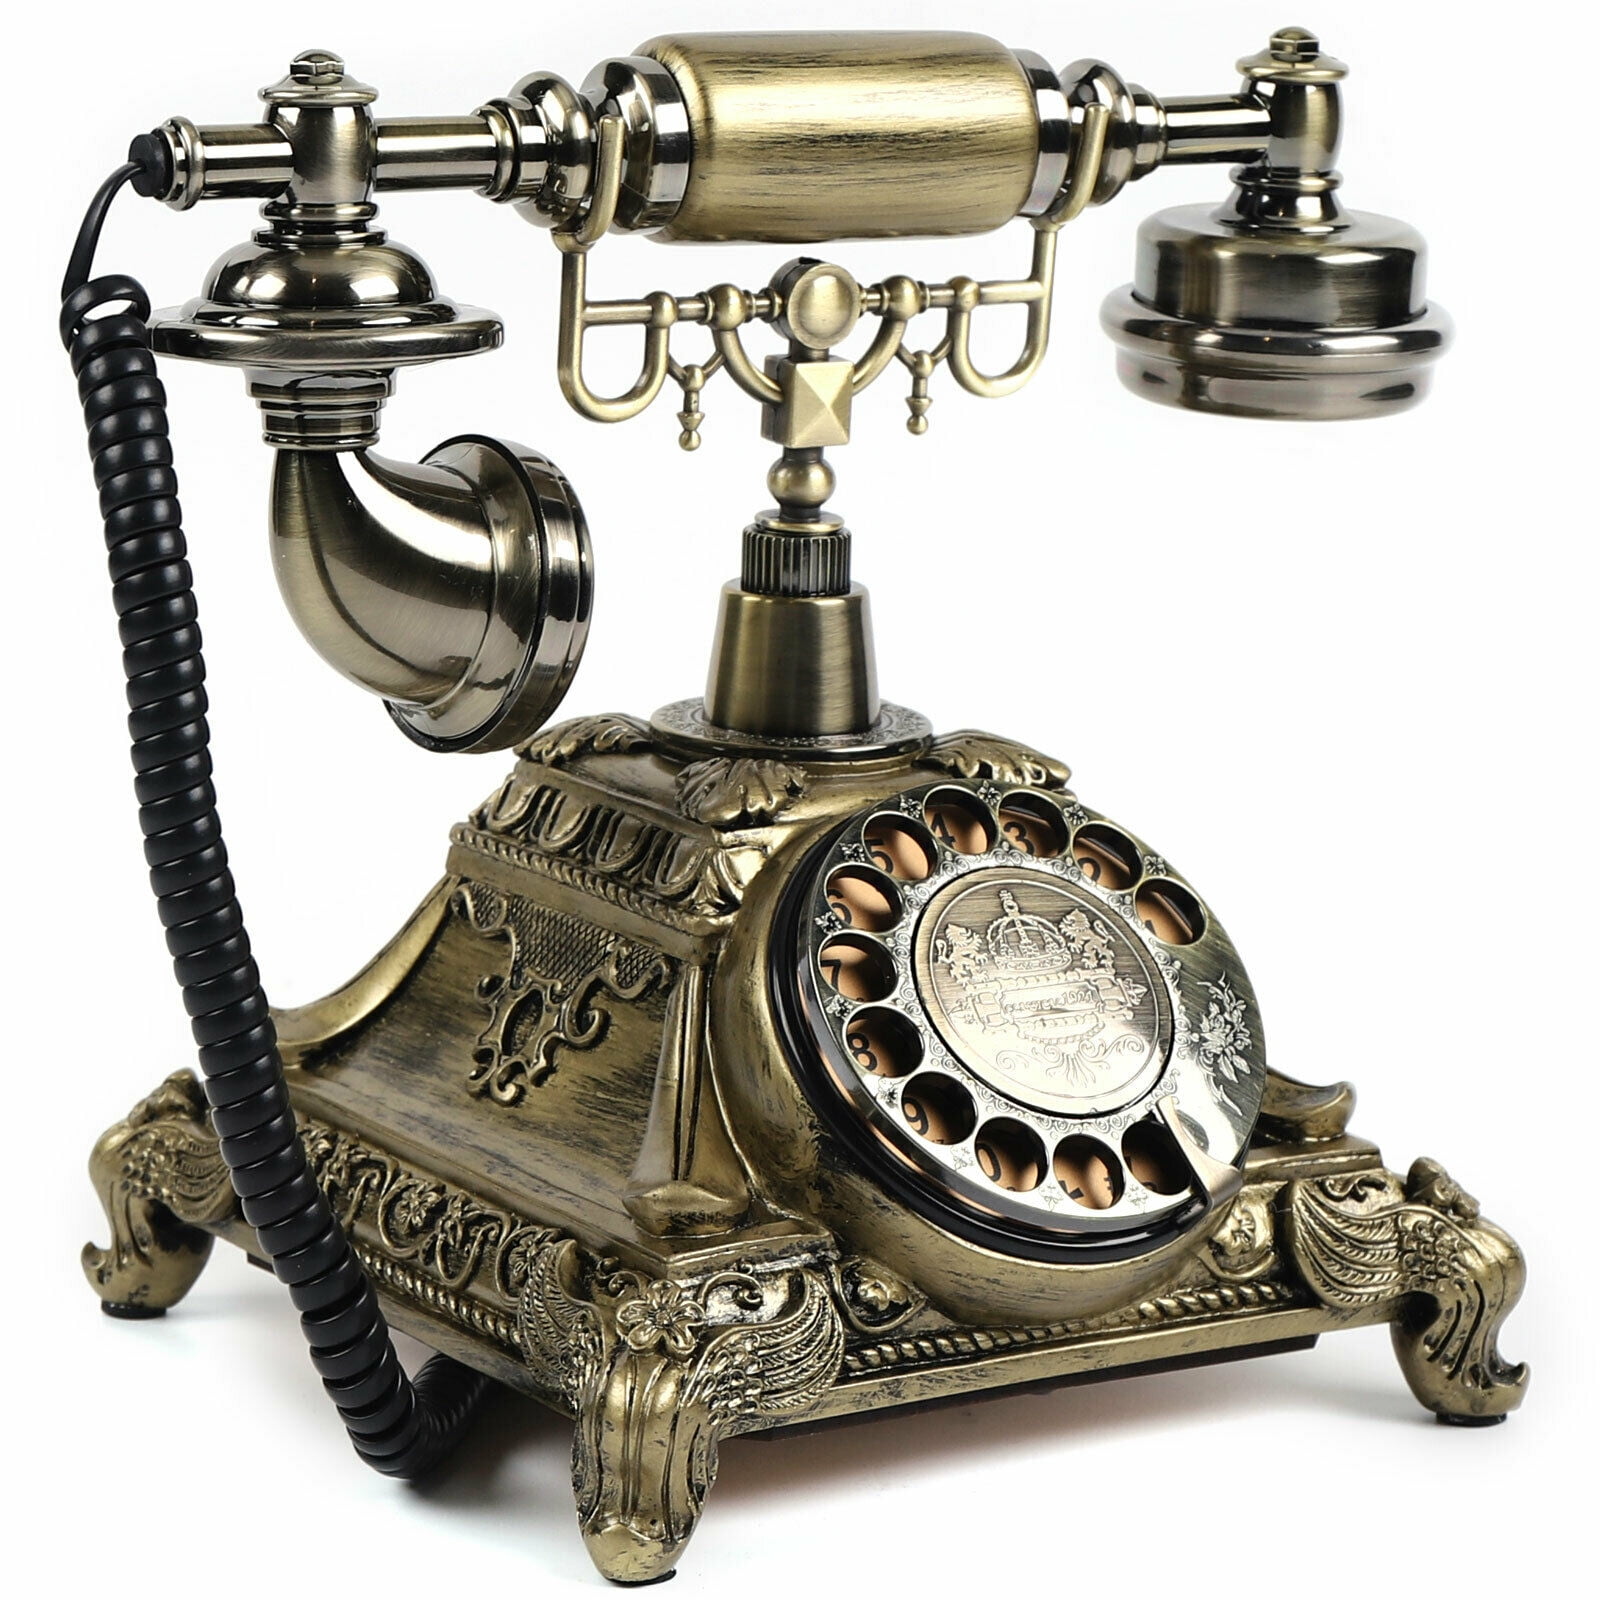 Vintage Style Rotary Telephone Desk Antique Old Phone Figurine Model Decor New 